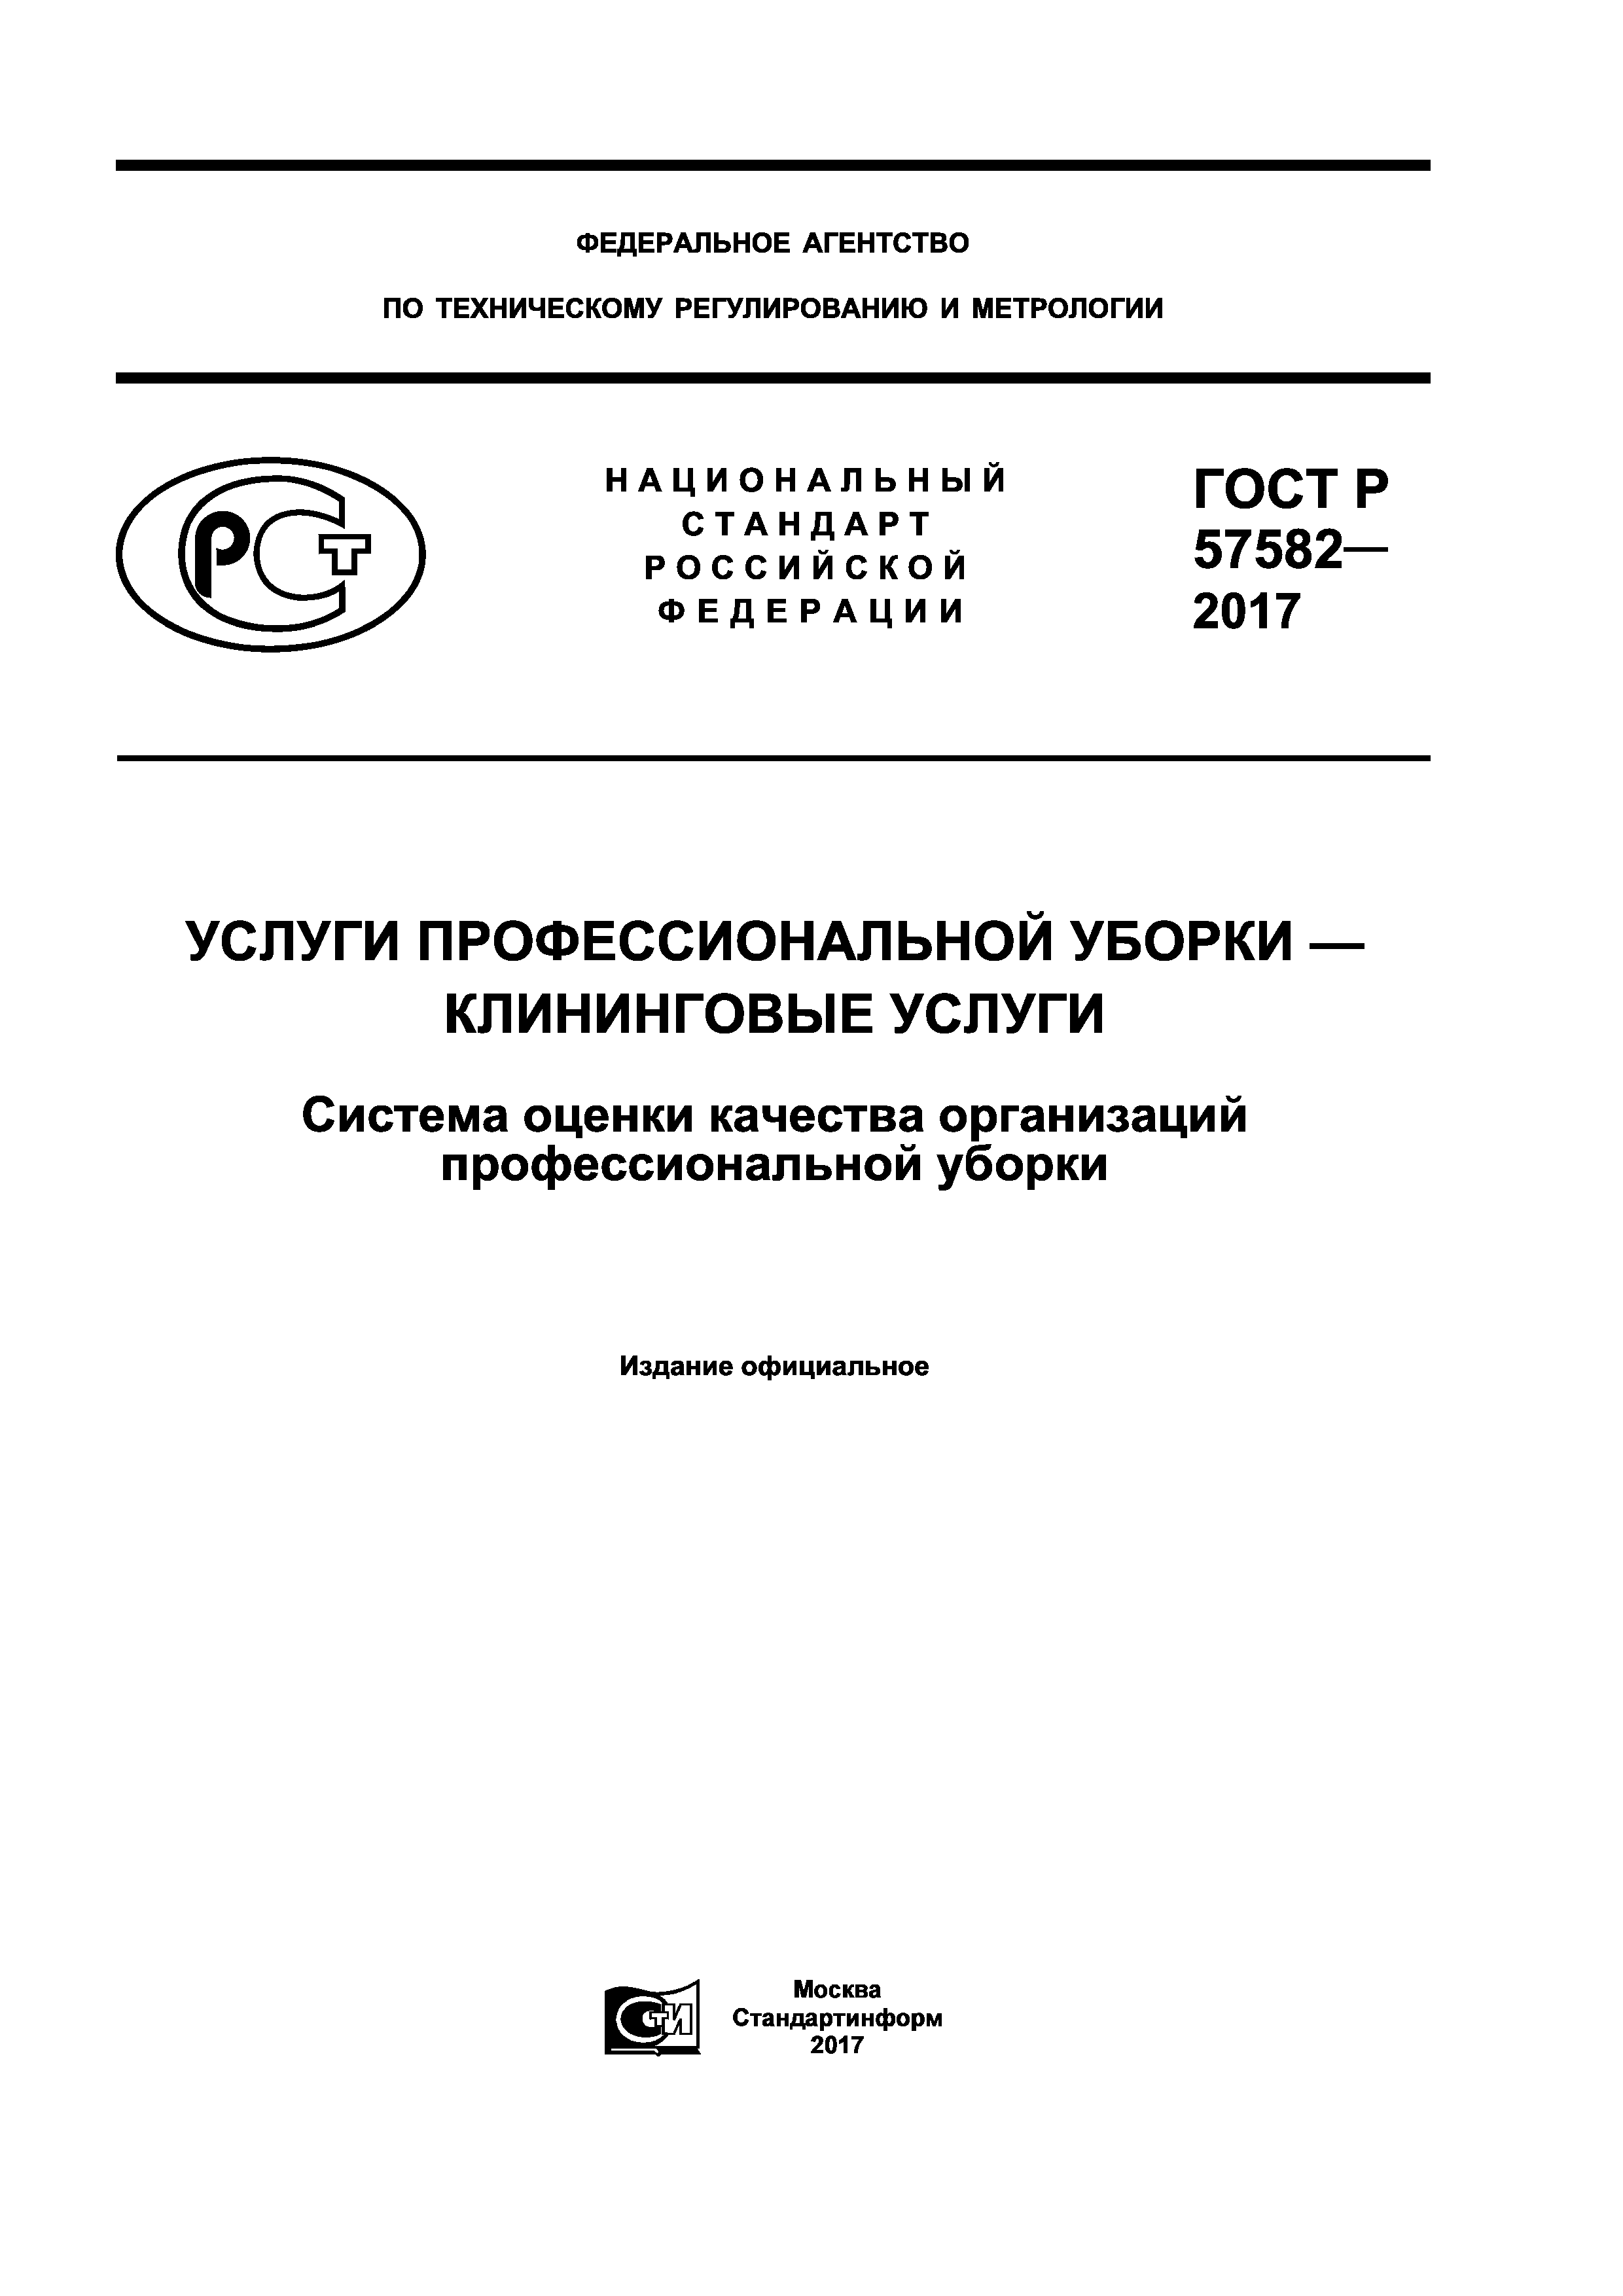 ГОСТ Р 57582-2017